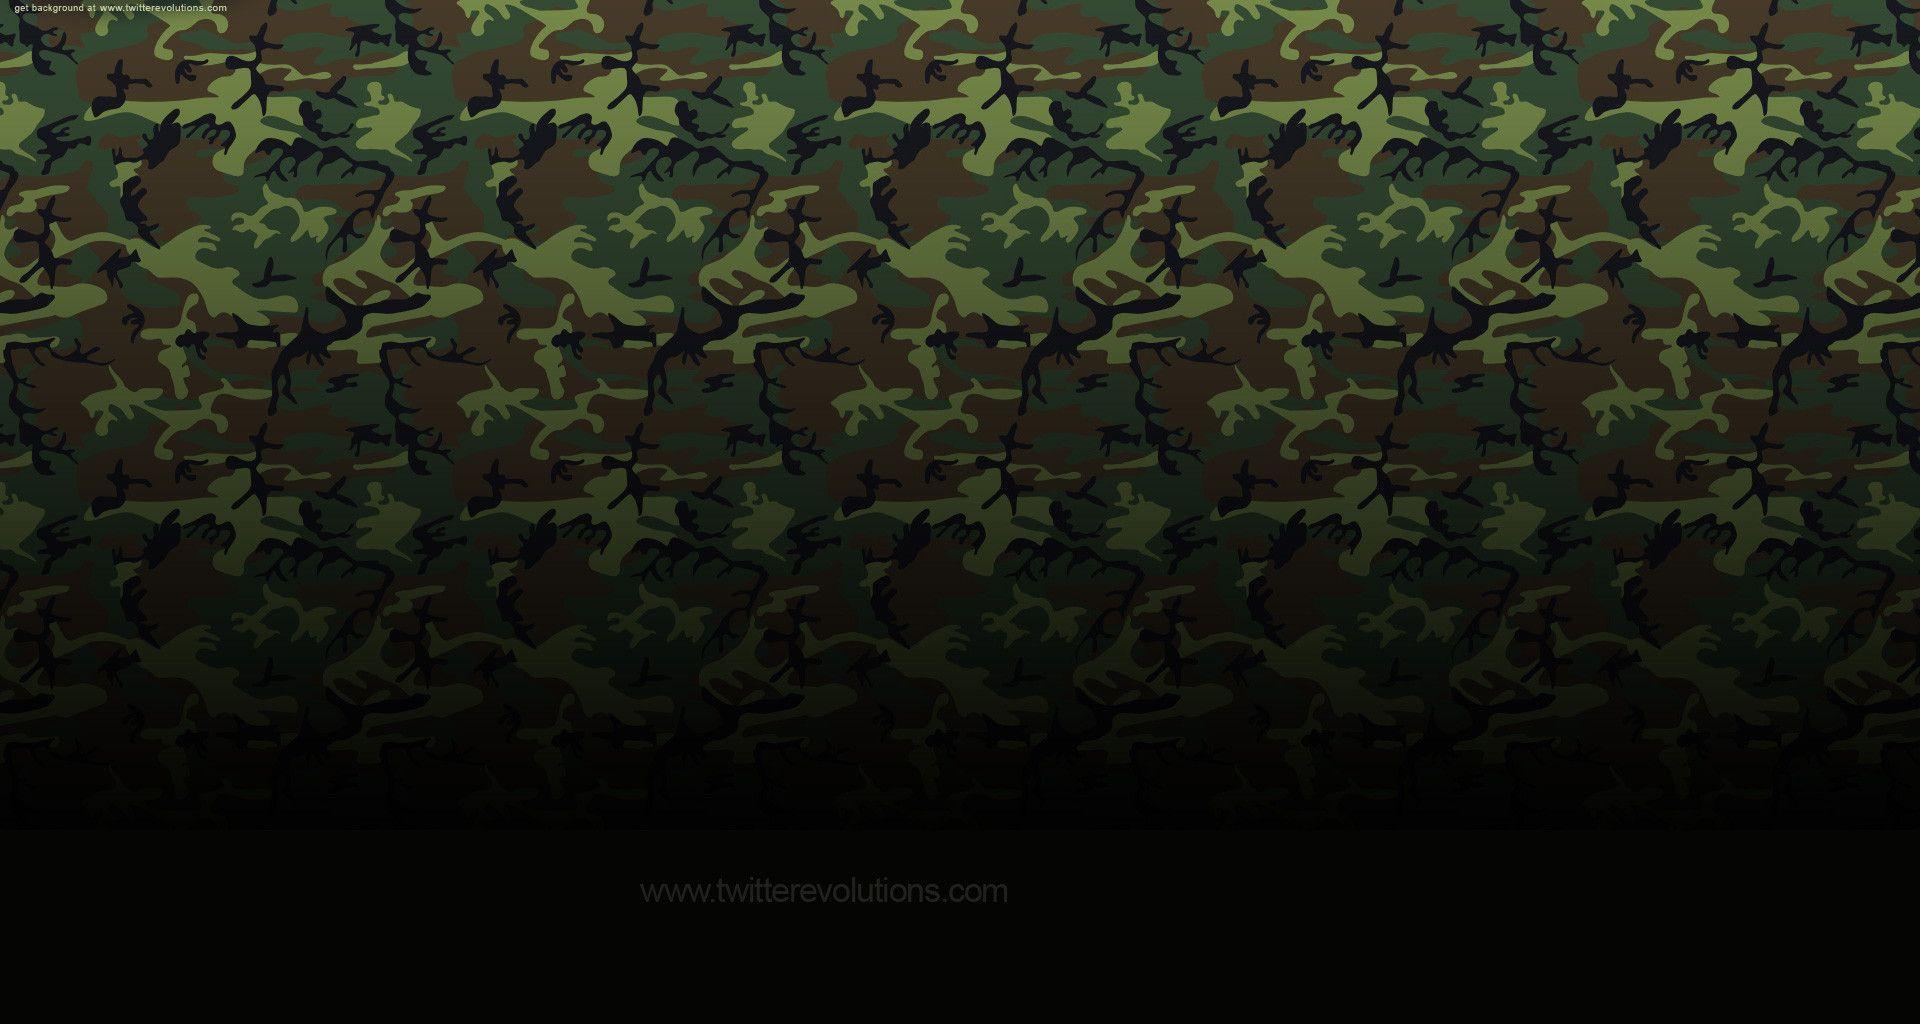 Twitter marine corps camouflage background. Twitter background